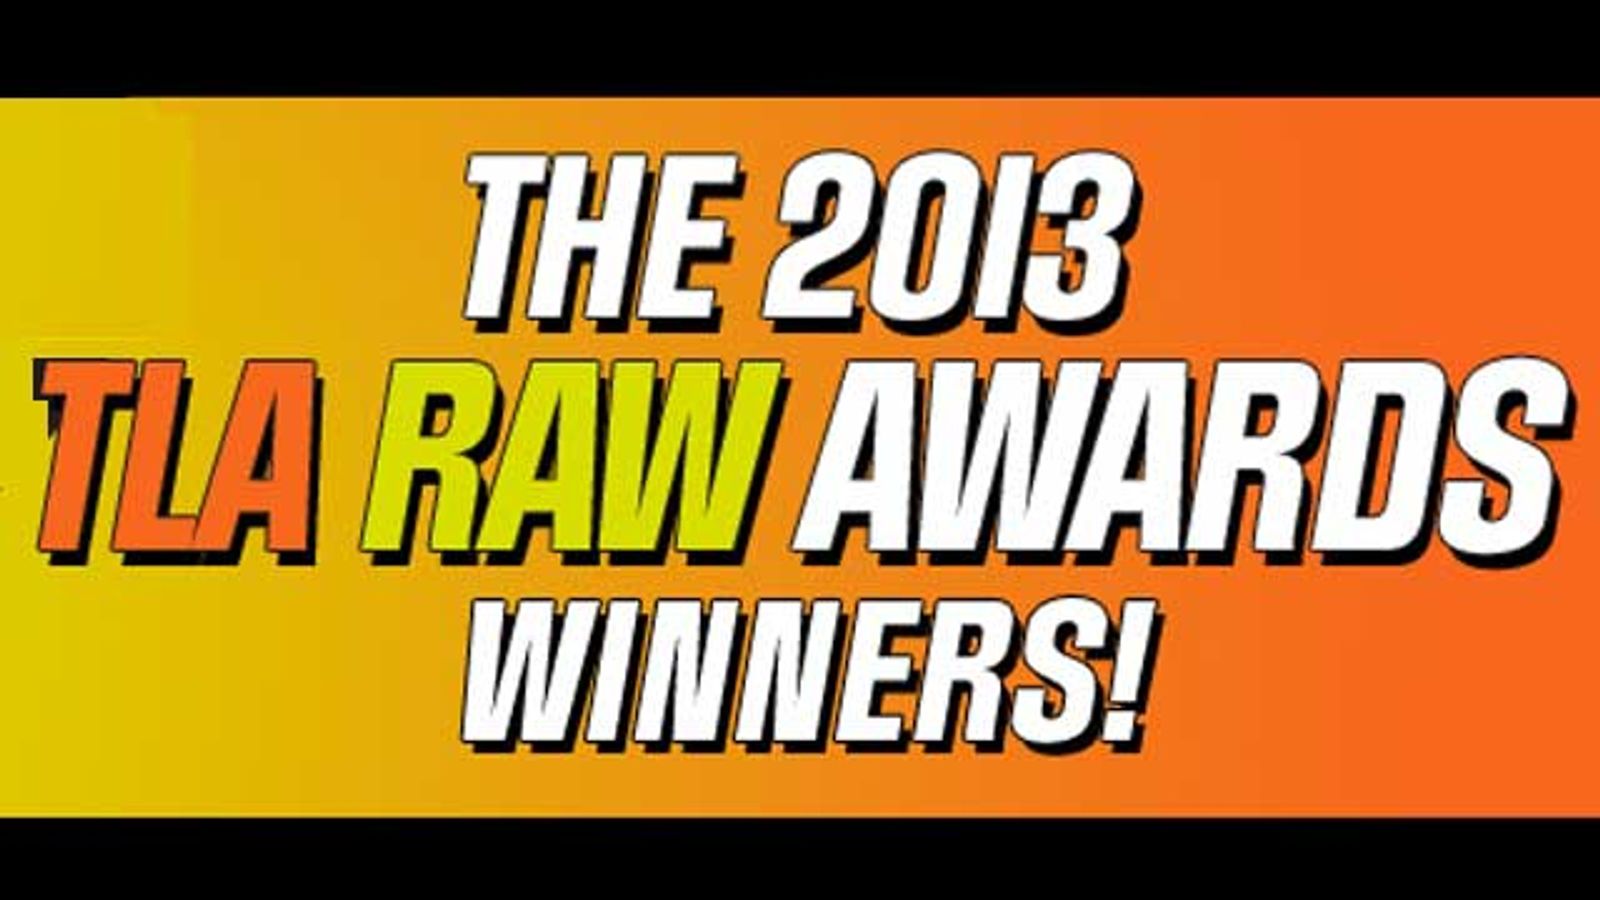 TLARAW.com Announces 2013 Raw Award Winners